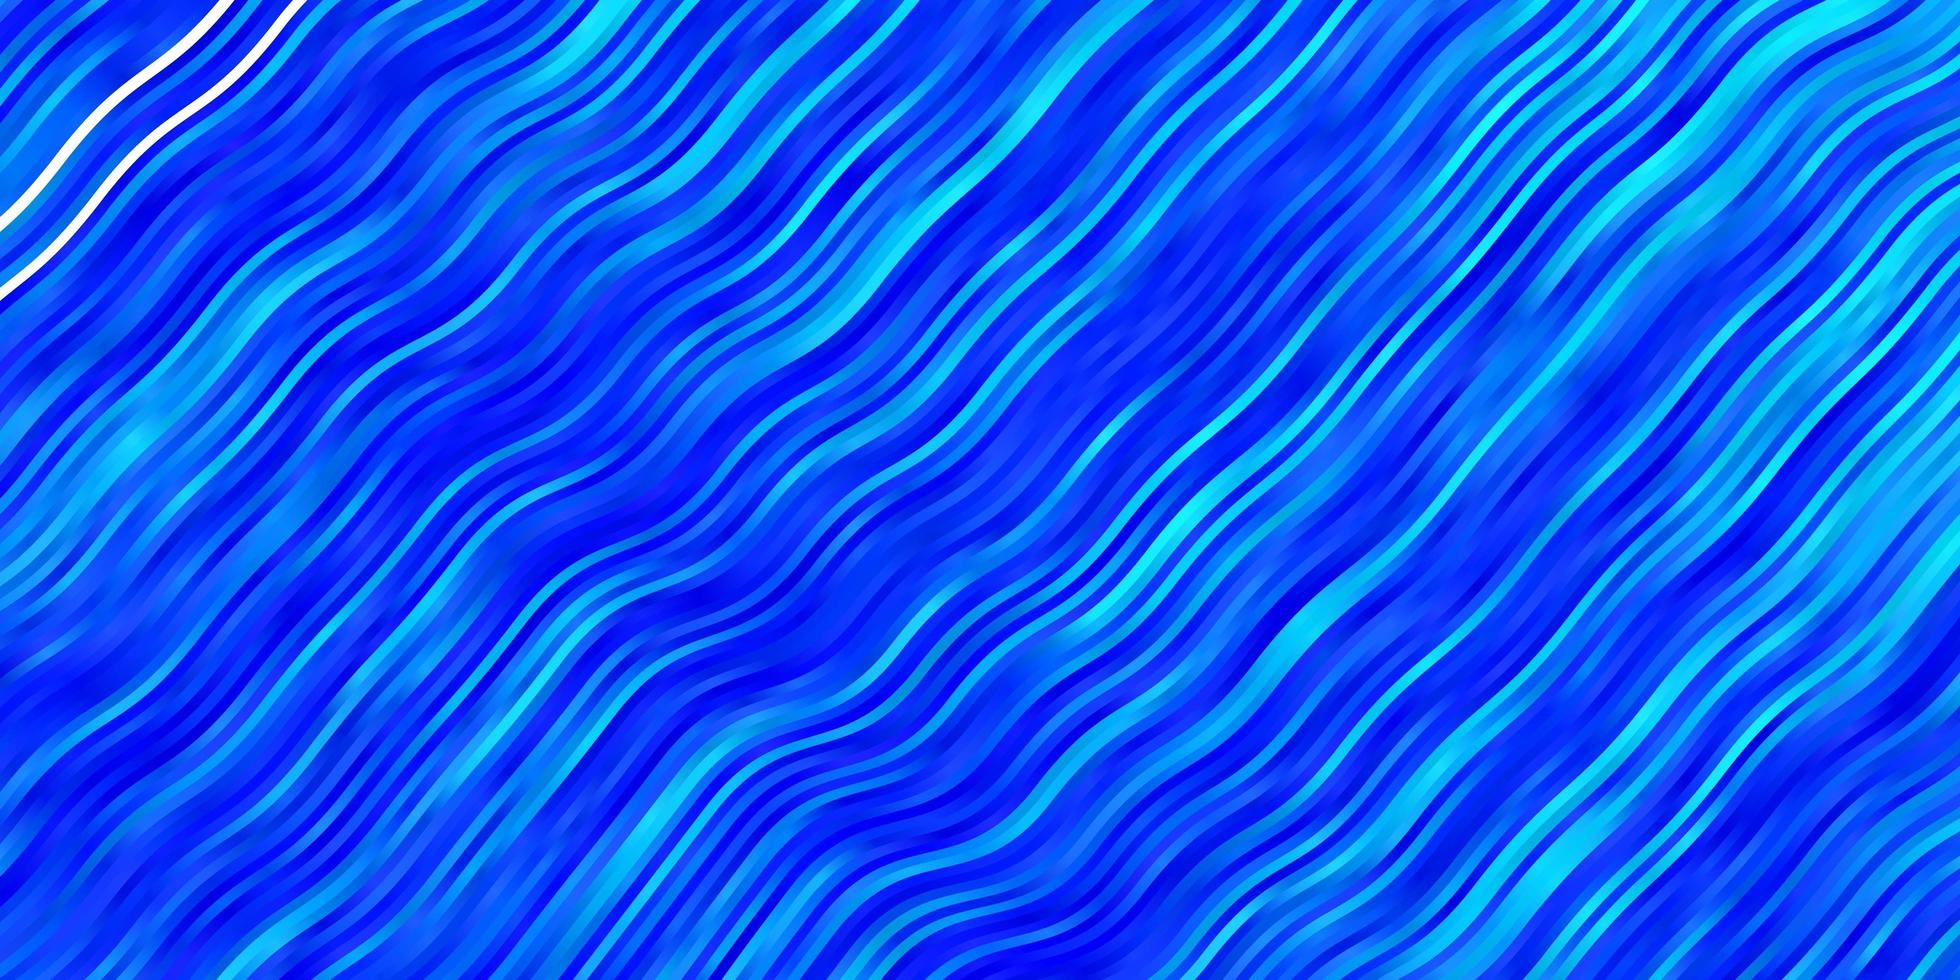 fundo vector azul claro com curvas.